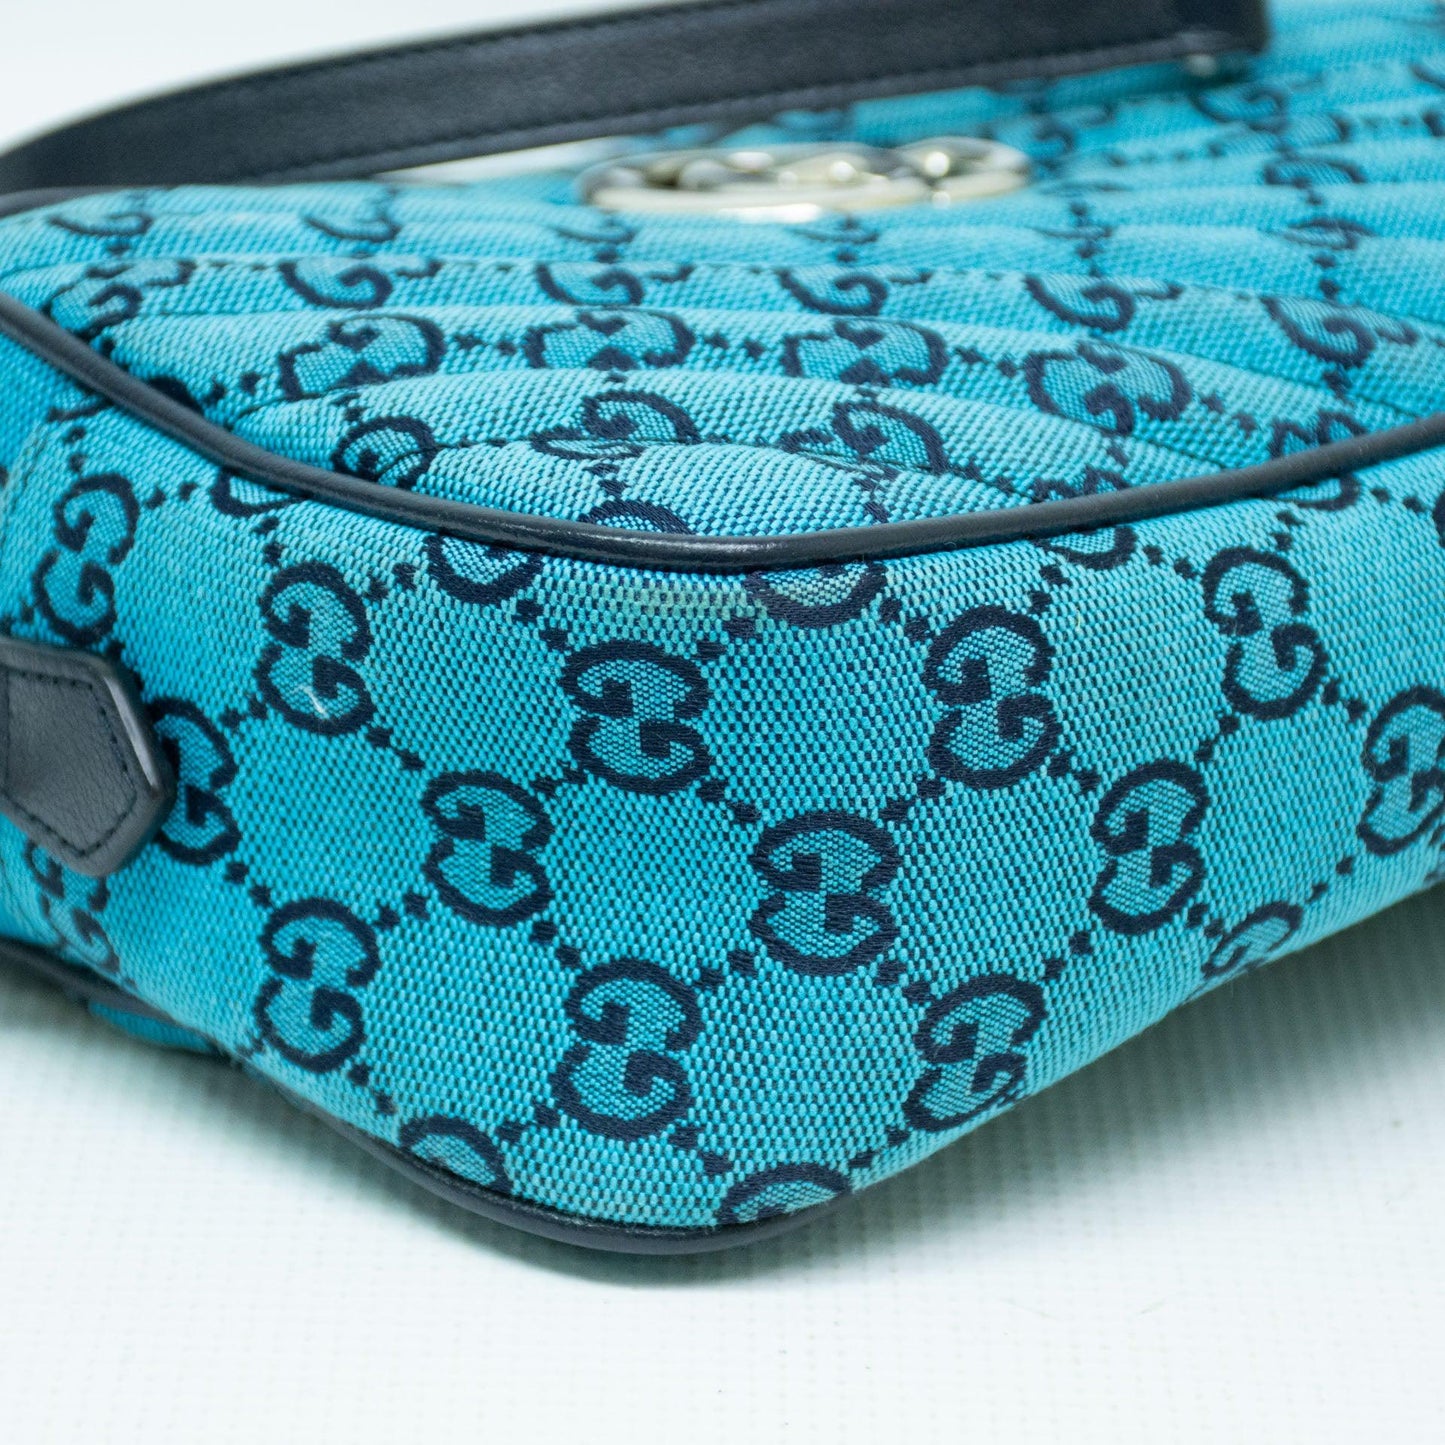 Gucci GG Marmont Bolso de hombro - Azul - 447632 - ipawnishop.com